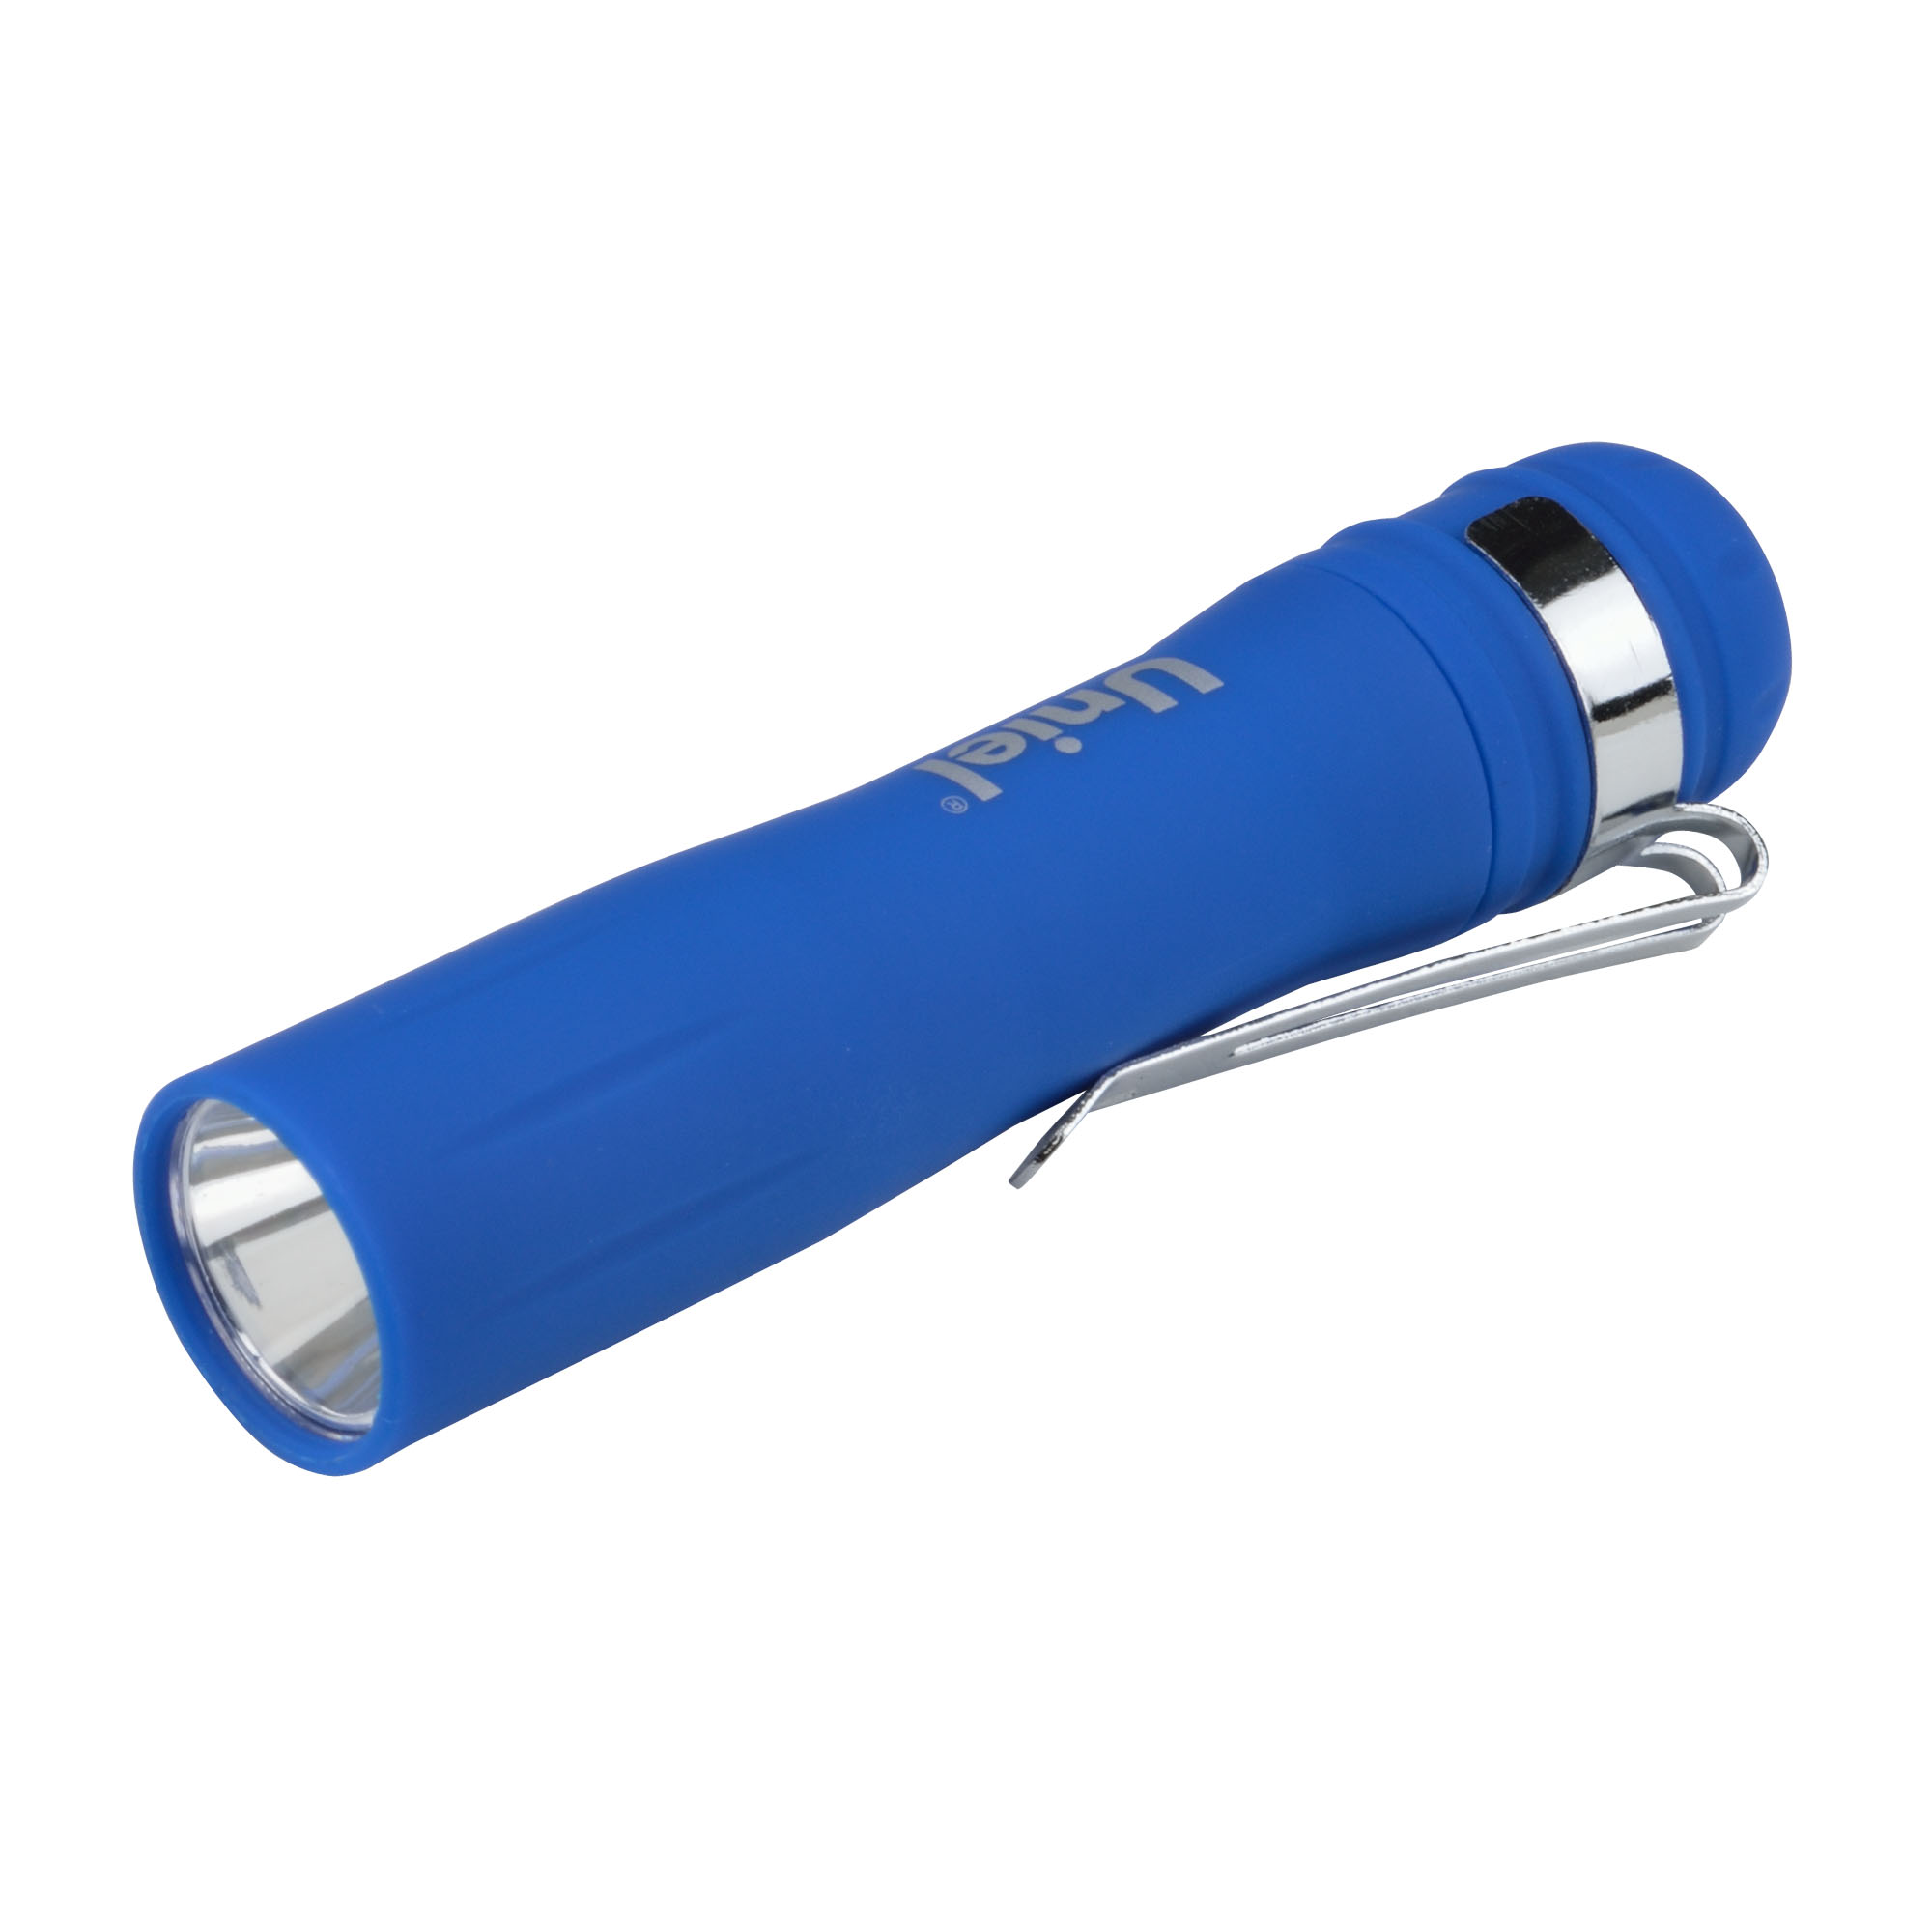 S-LD045-B Blue Фонарь Uniel серии Стандарт Simple Light Debut. пластиковый корпус. 0.5 Watt LED. упаковка блистер. 1хАА н-к. цвет синий